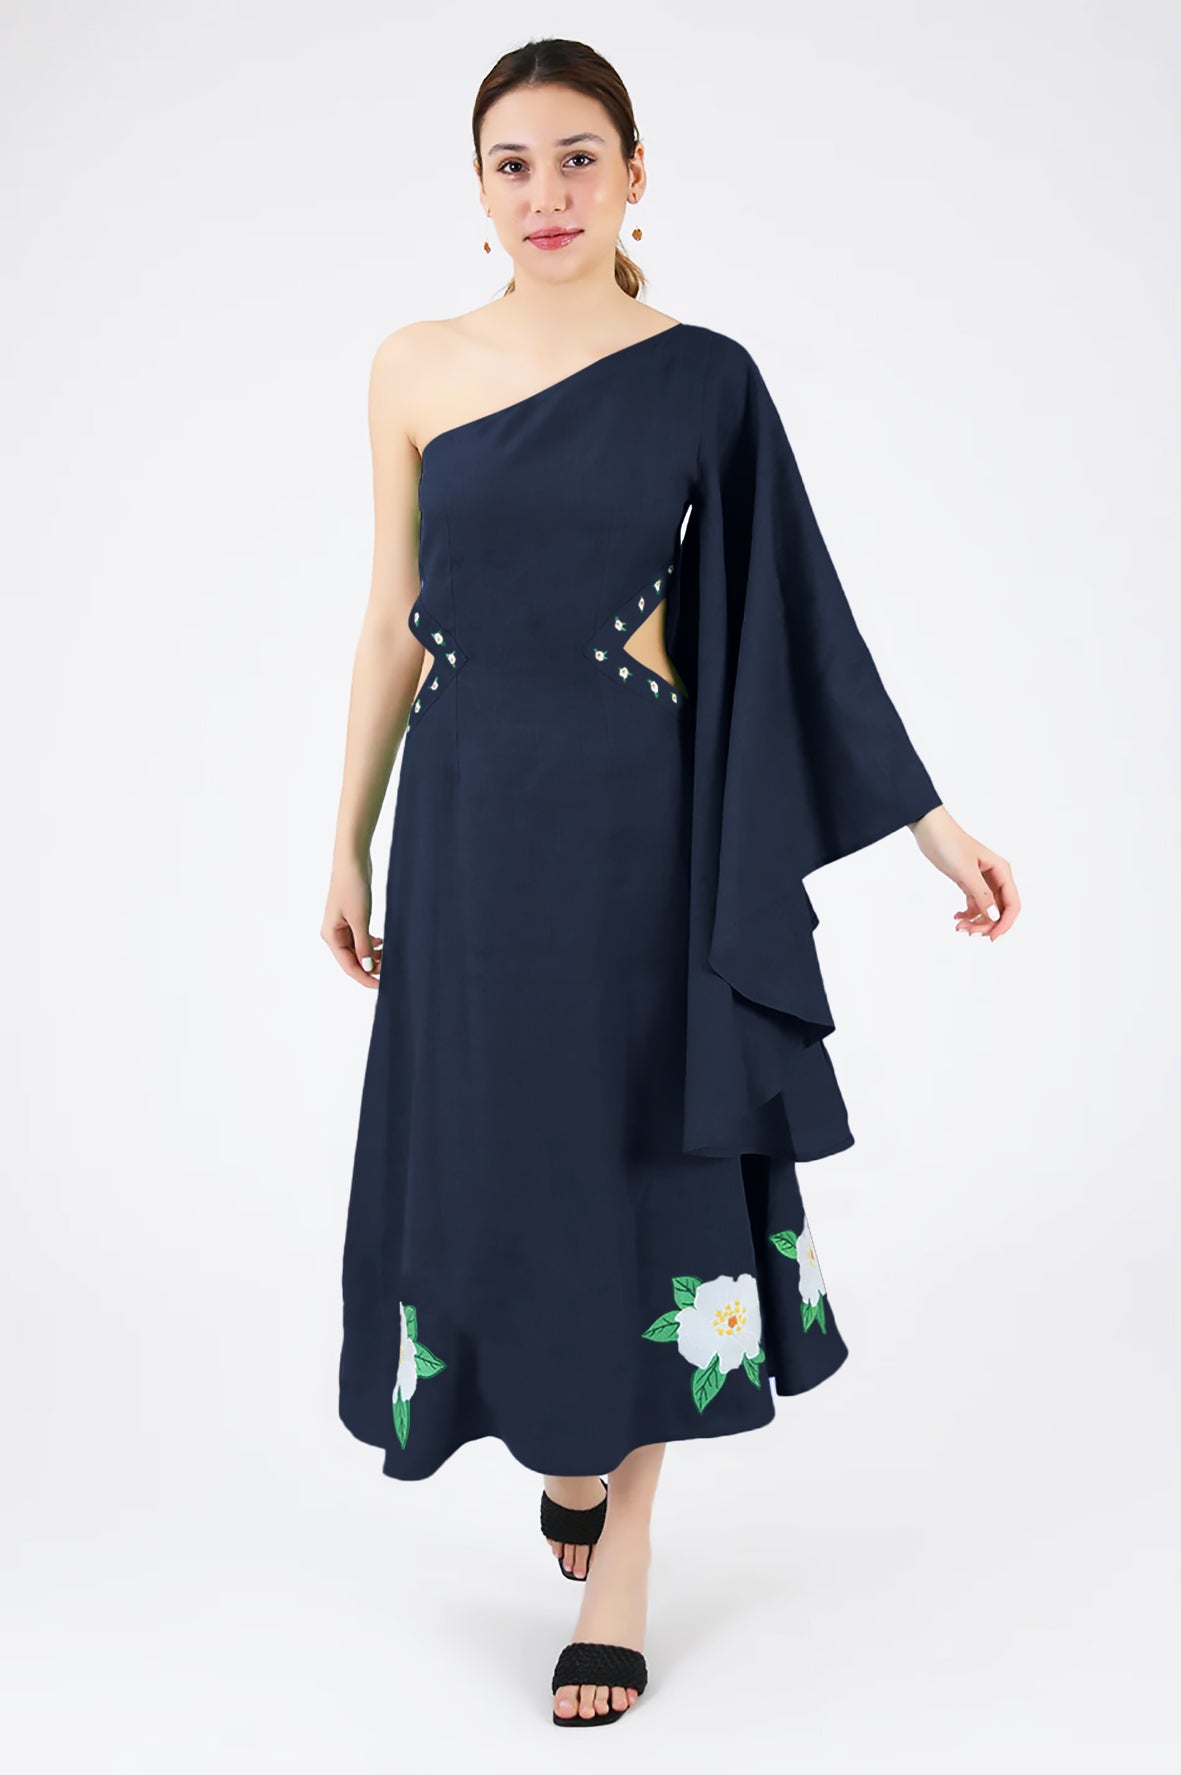 Narma Dress (Wanga Collection) in Indigo Blue